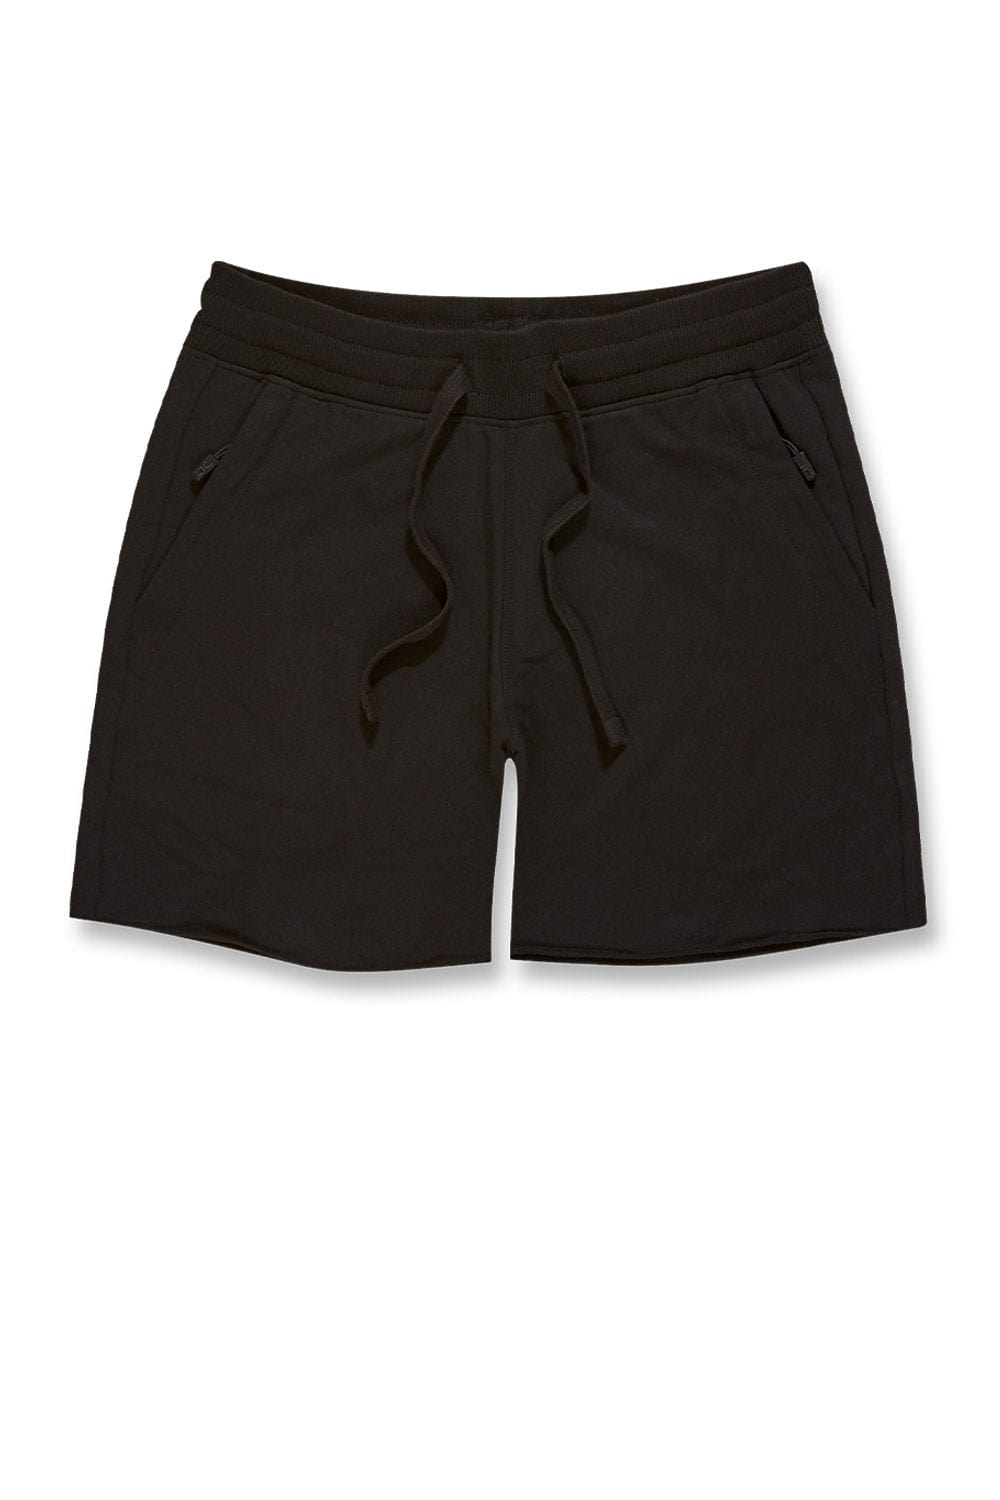 Jordan Craig Athletic - Summer Breeze Knit Shorts Black / S